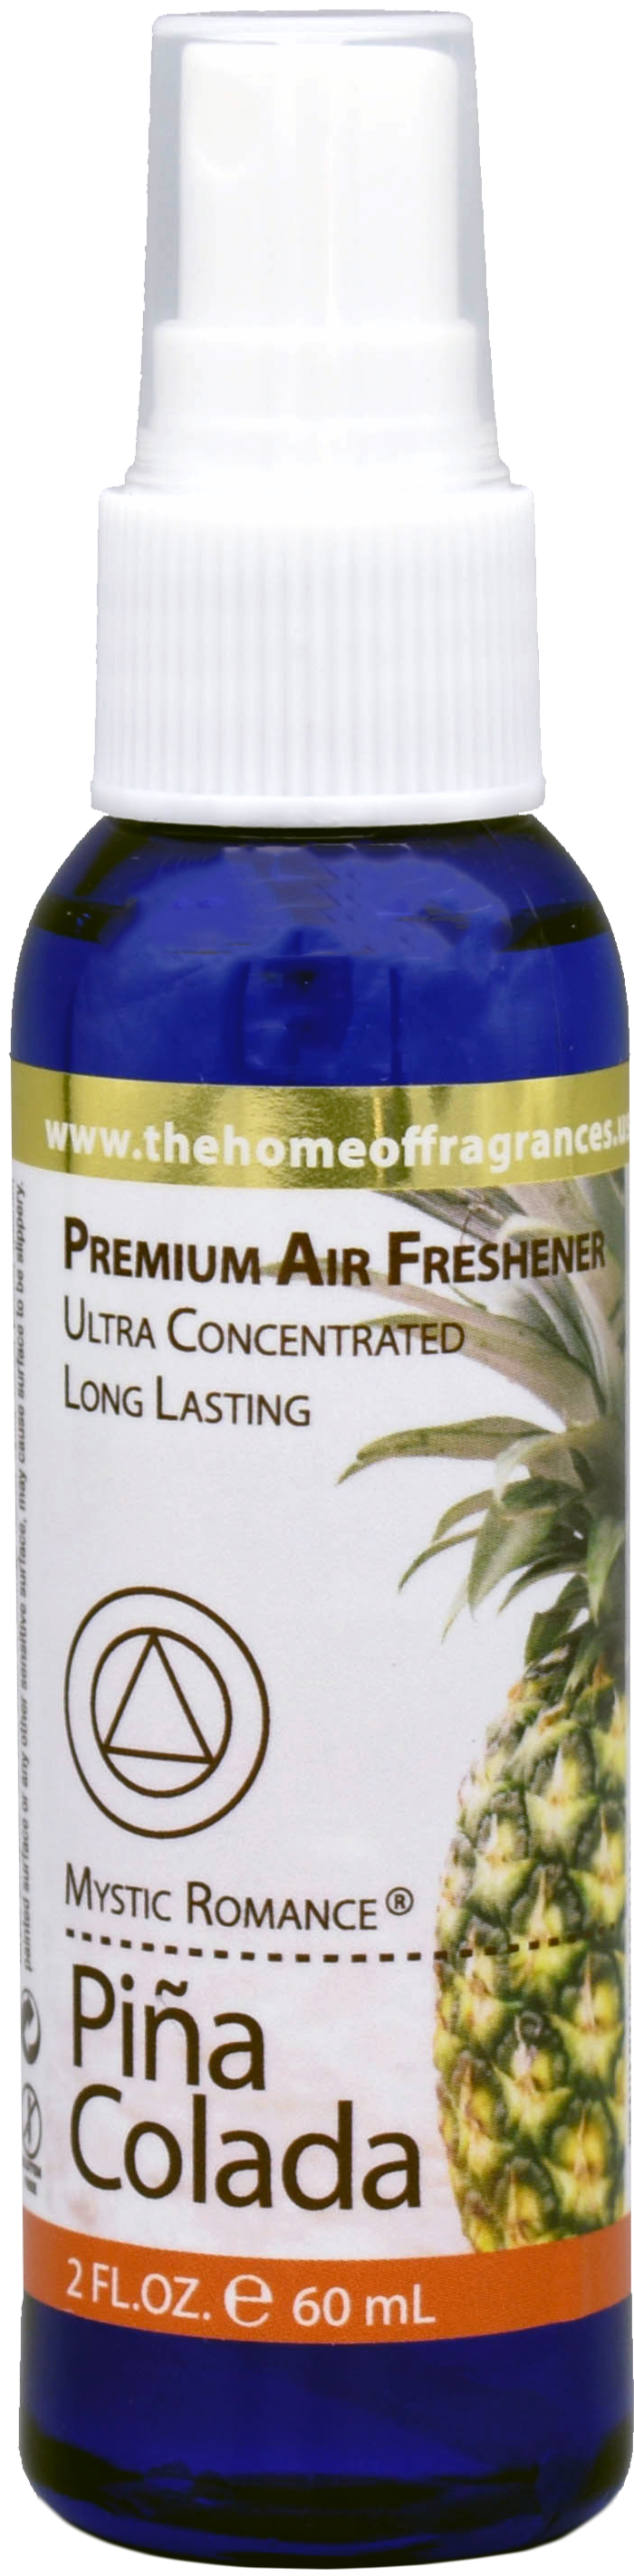 Piña Colada Air Freshener